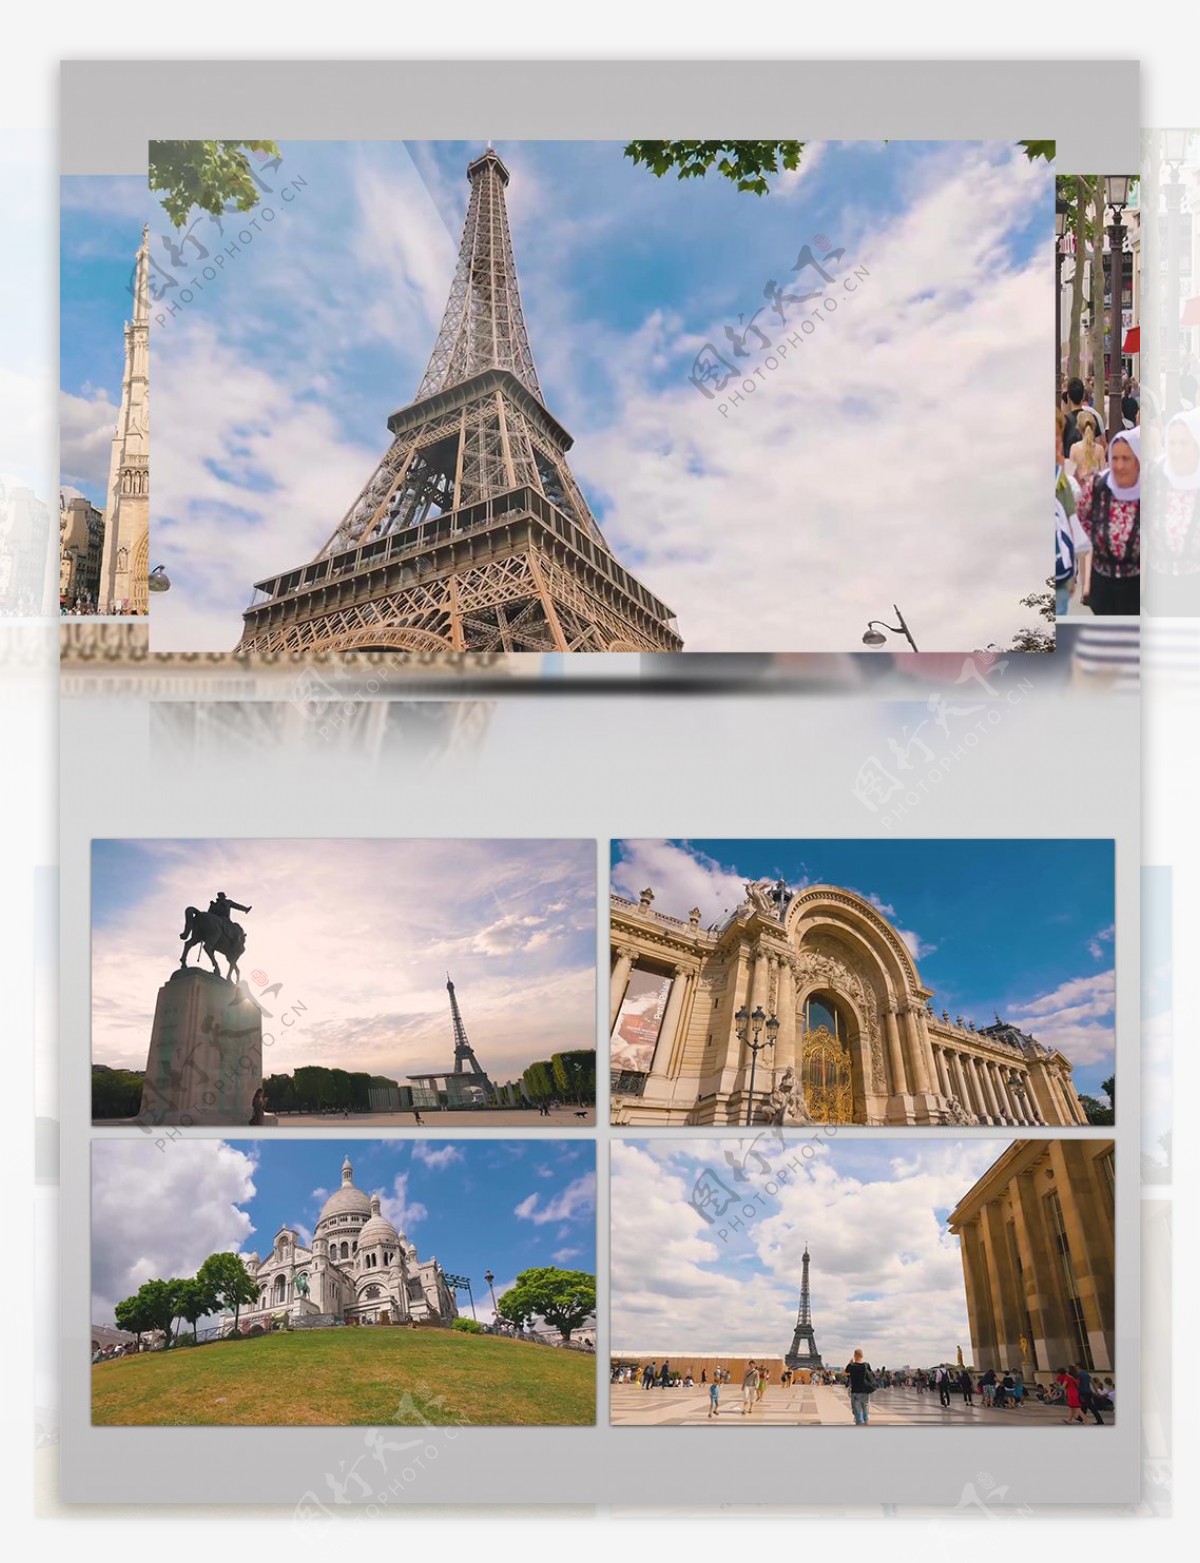 4k浪漫巴黎铁塔城市景观历史人文建筑展示